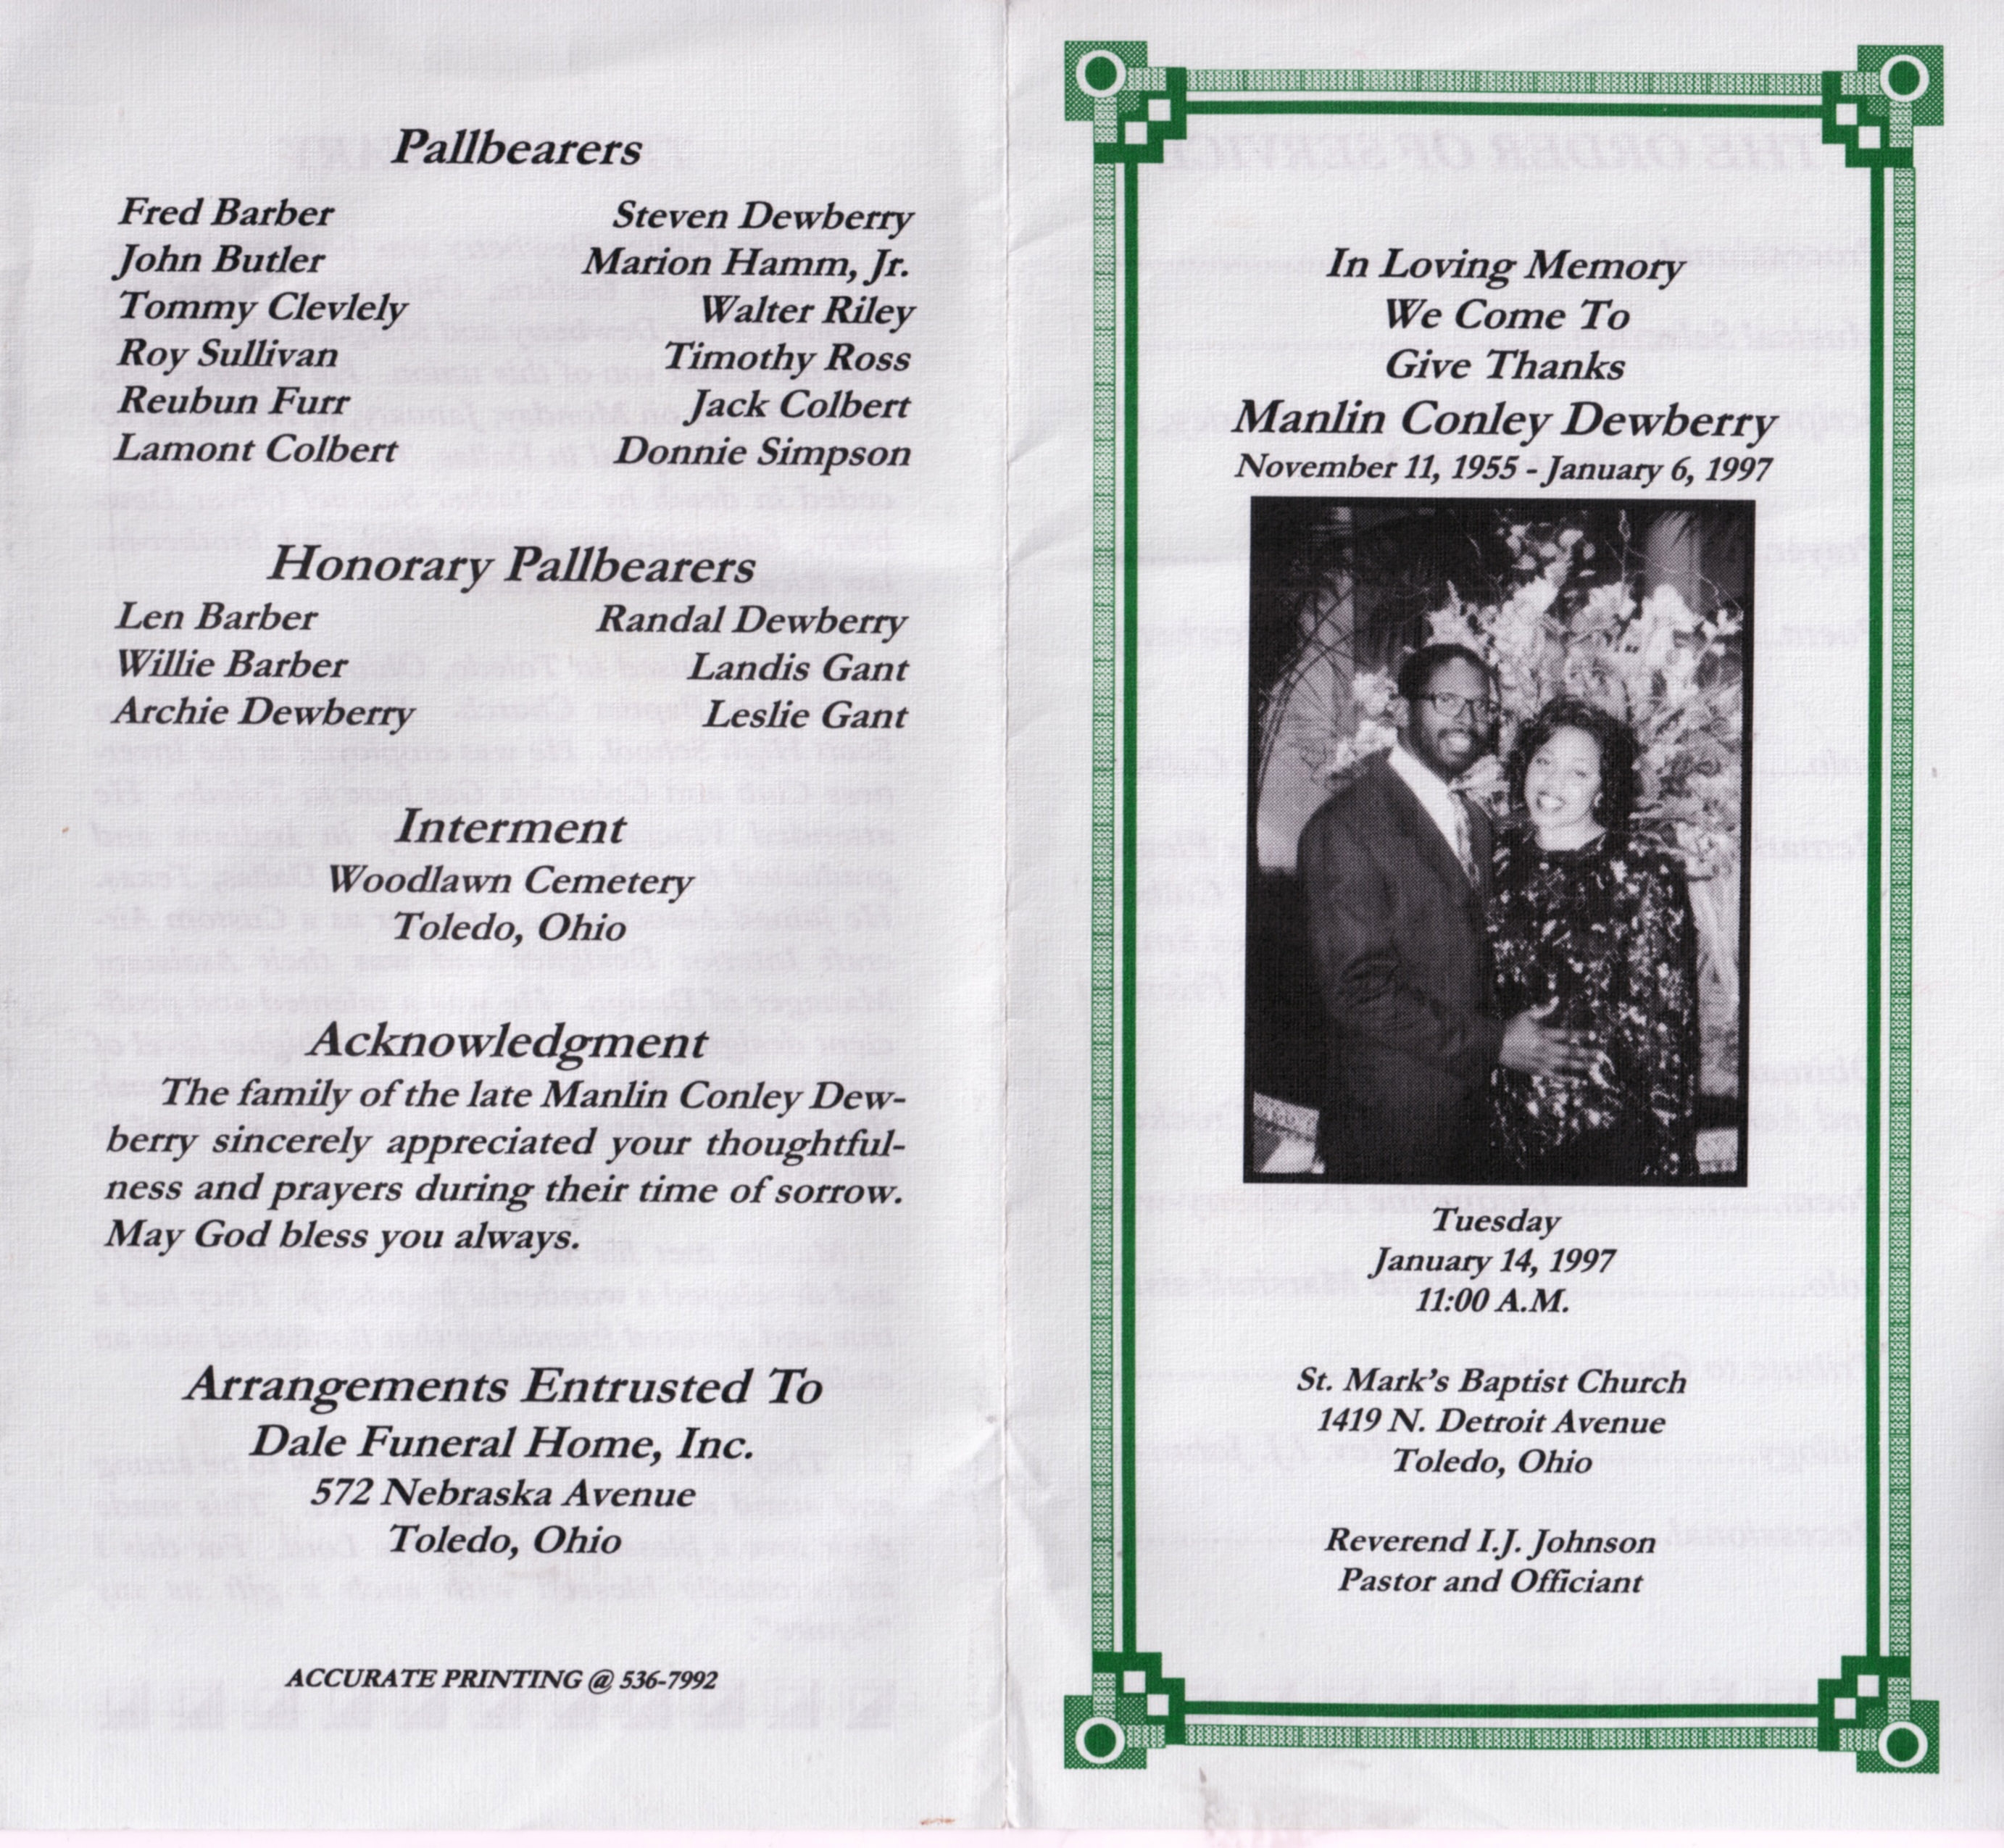 Manlin Conley Dewberry funeral program